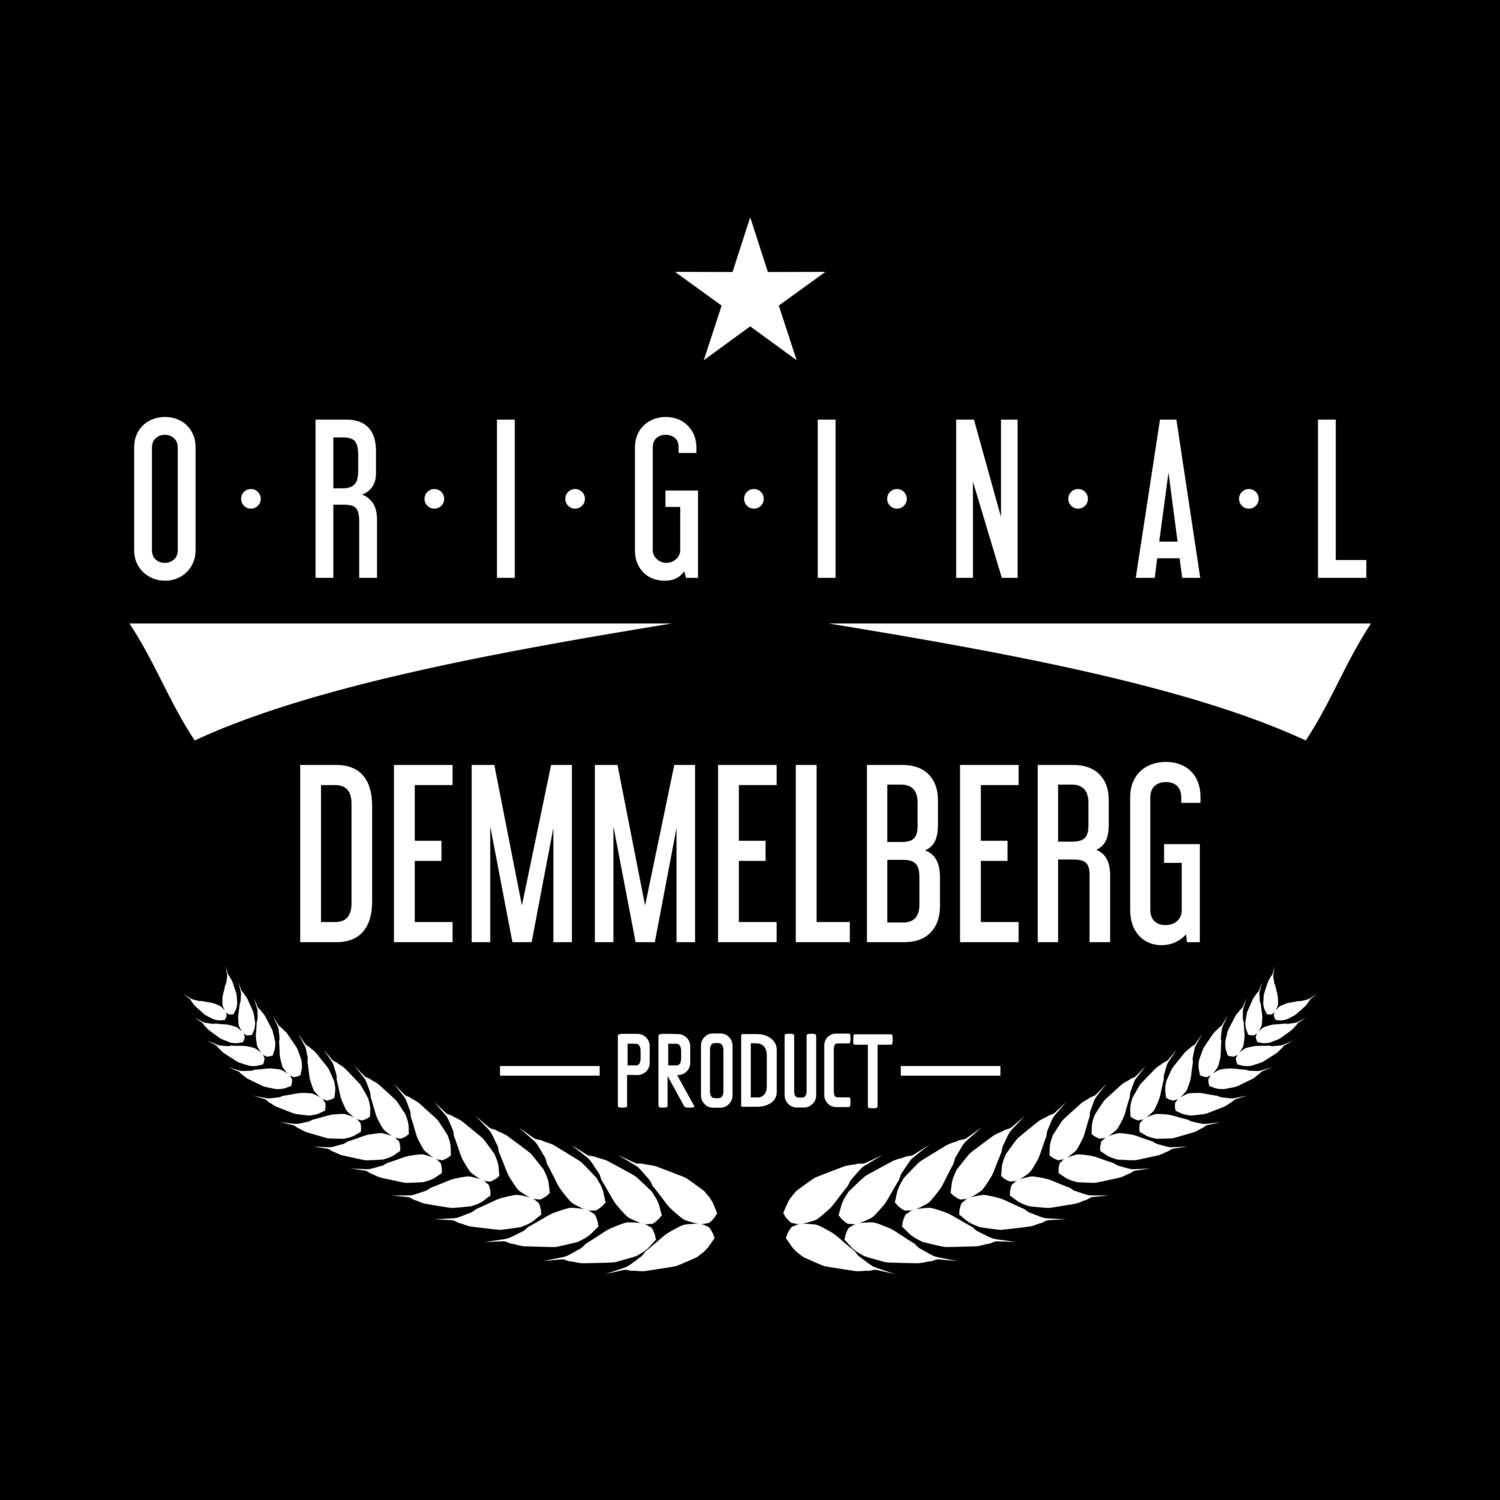 Demmelberg T-Shirt »Original Product«